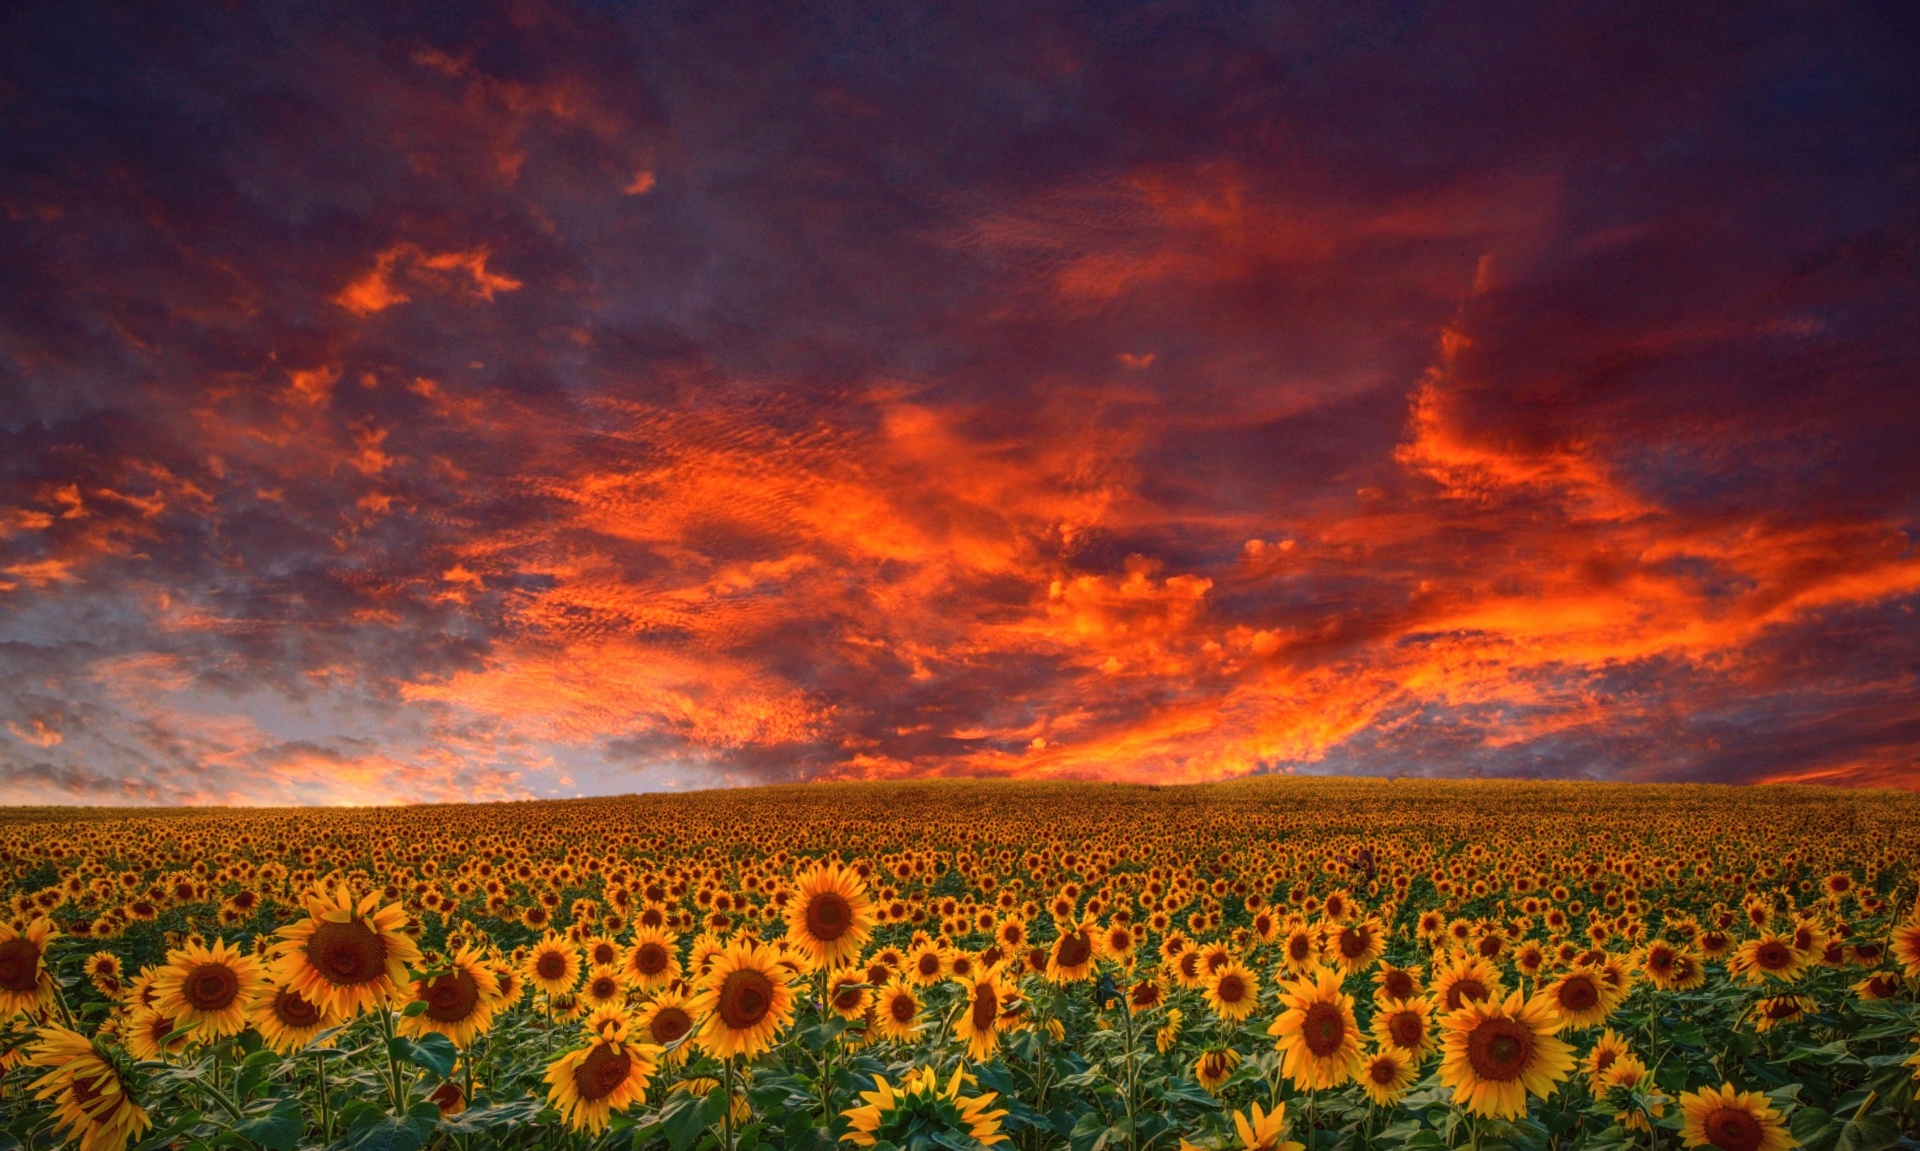 Sunflowers field sunset sky clouds landscape moody photography photo manipulation